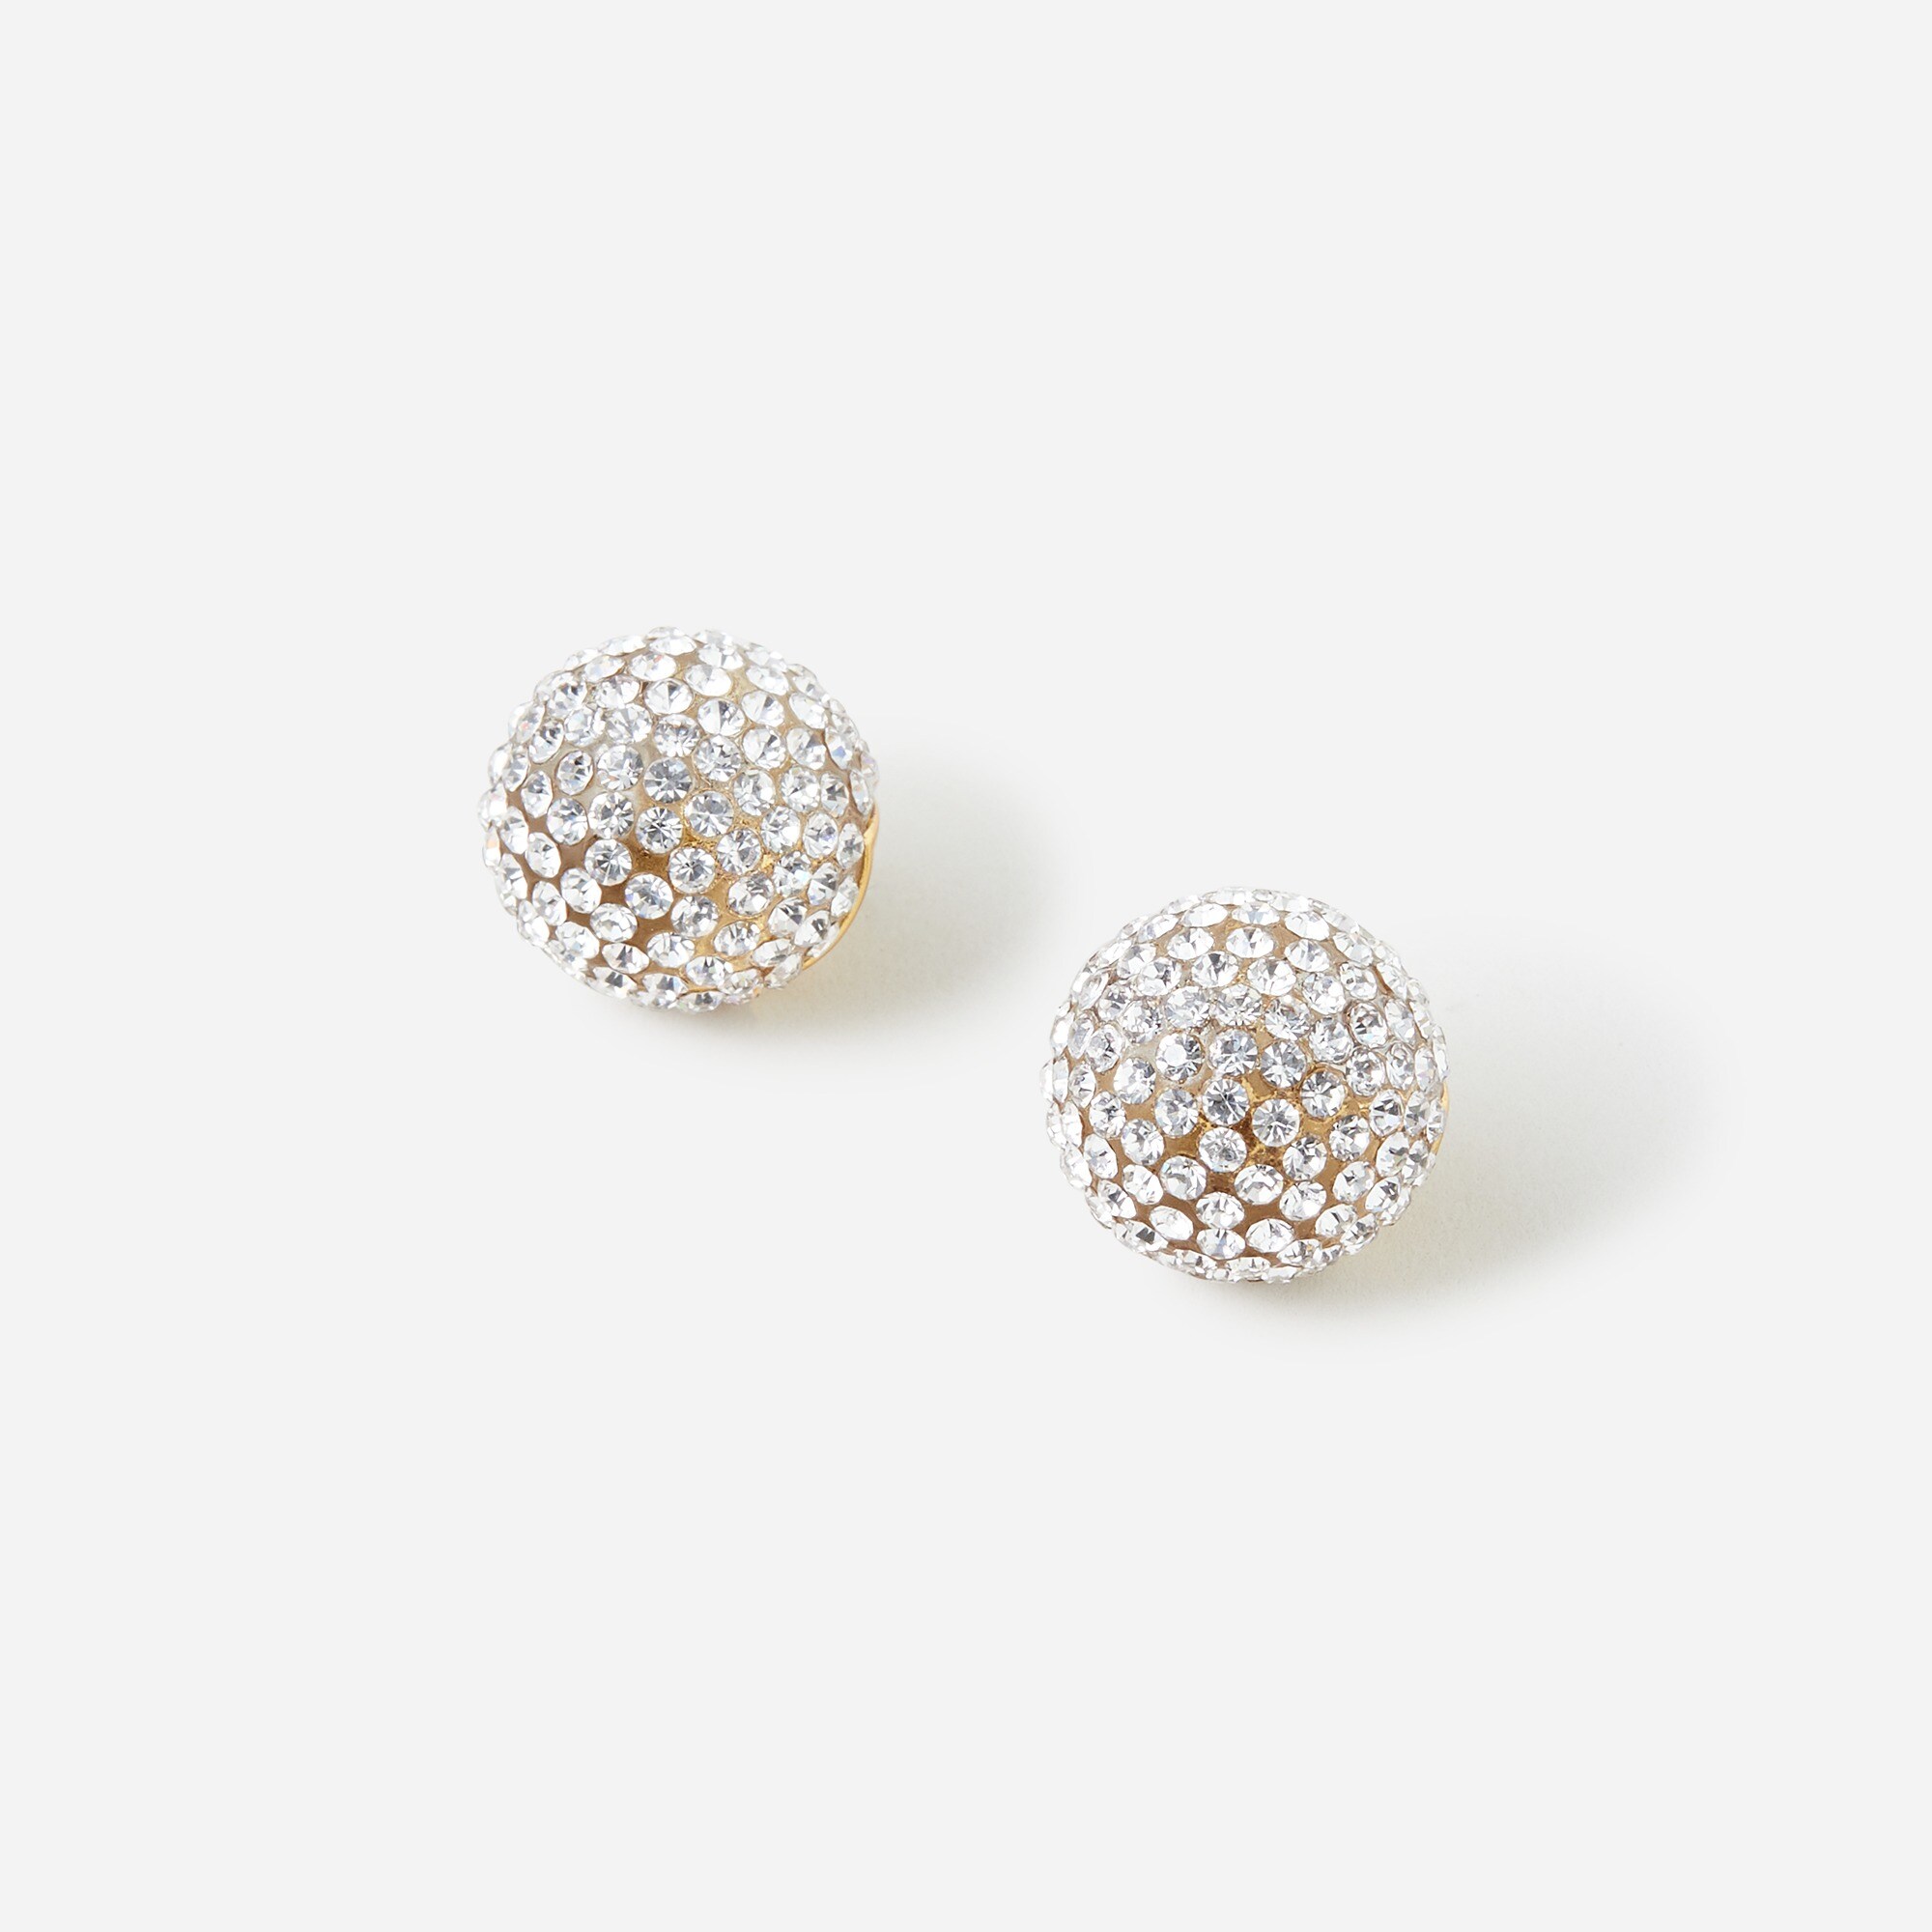  Crystal ball earrings